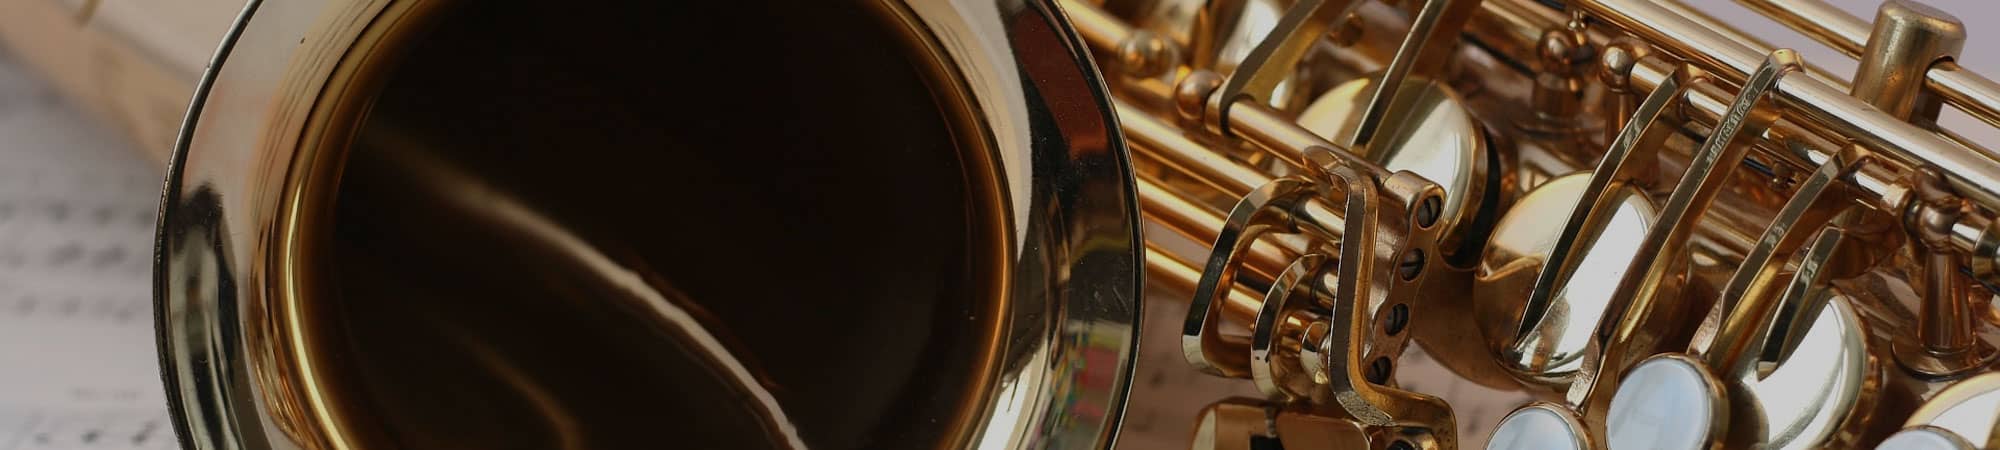 Brass instruments at Wrexham Sounds